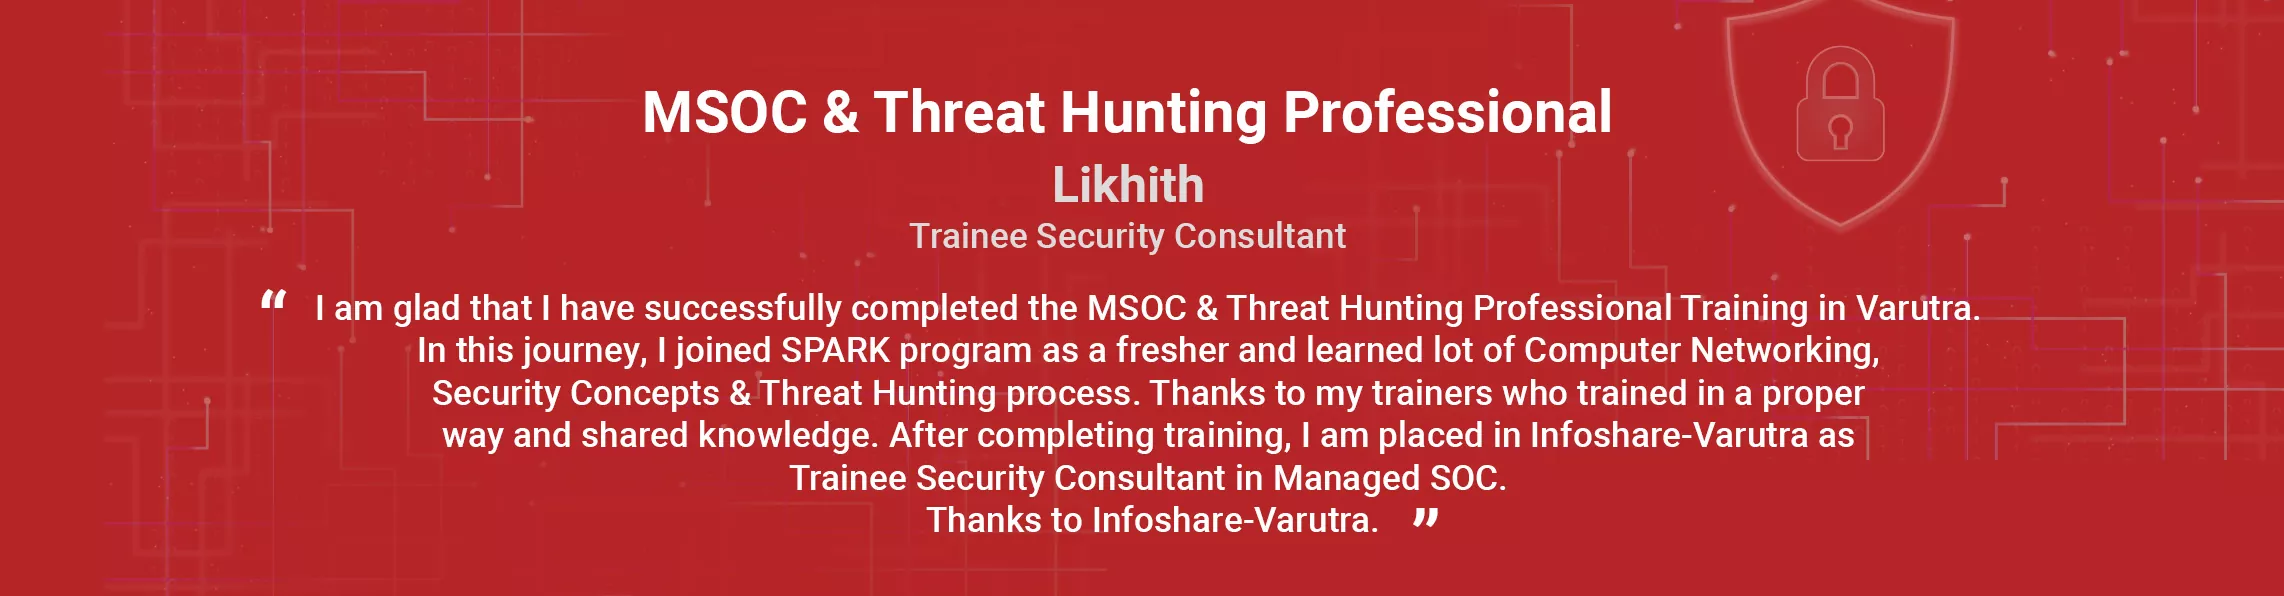 MSOC & Threat Hunting Professional